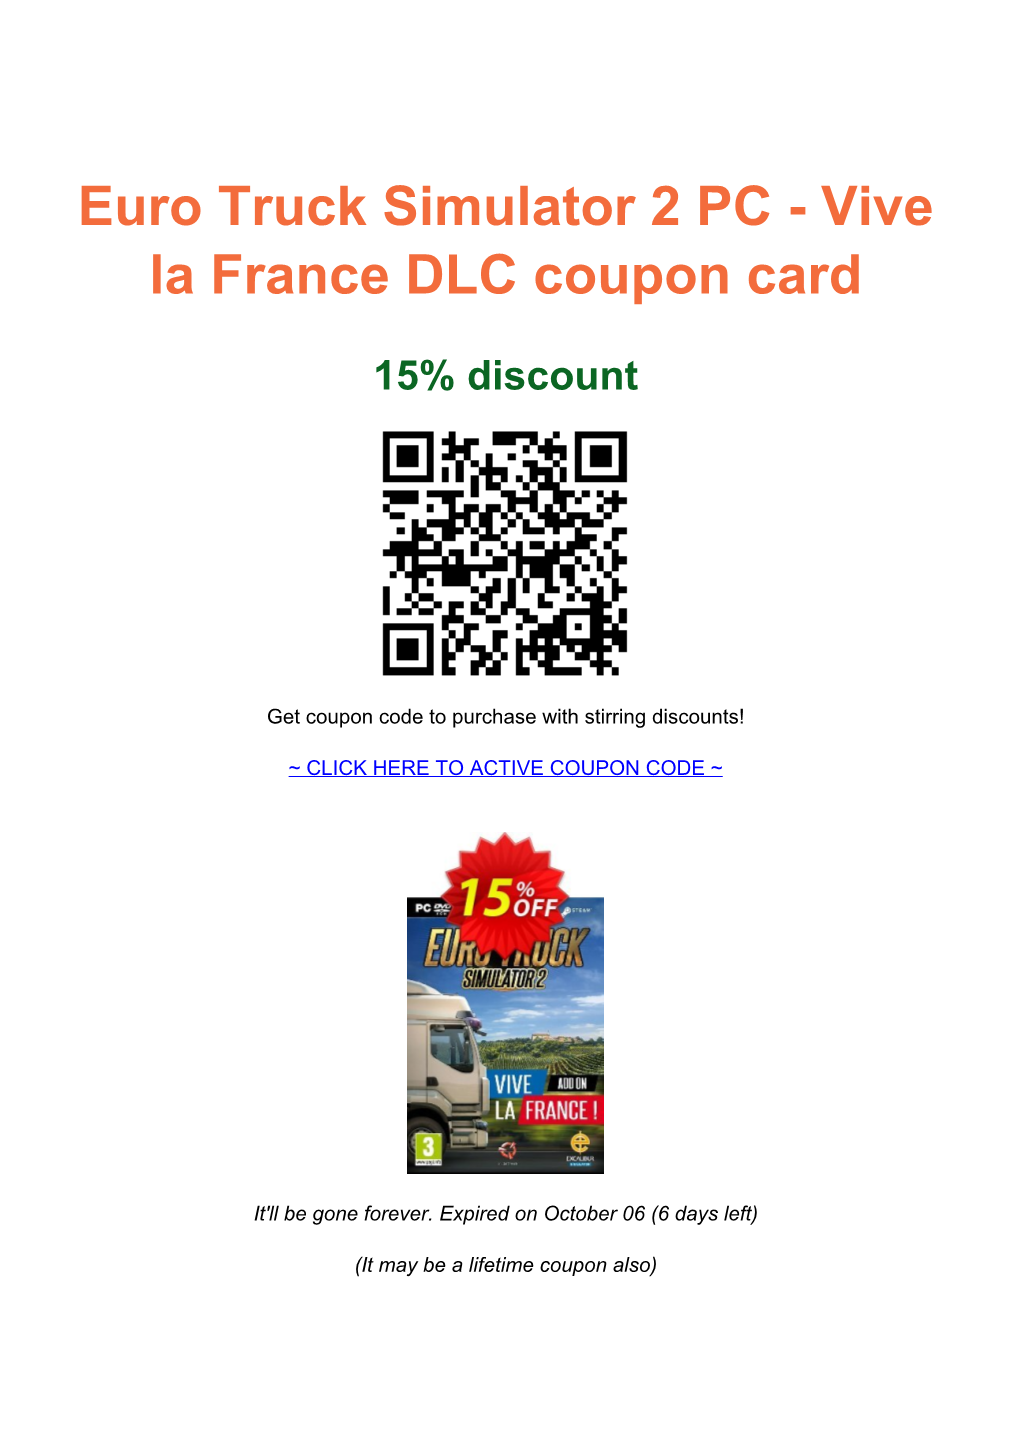 Euro Truck Simulator 2 PC - Vive La France DLC Coupon Card